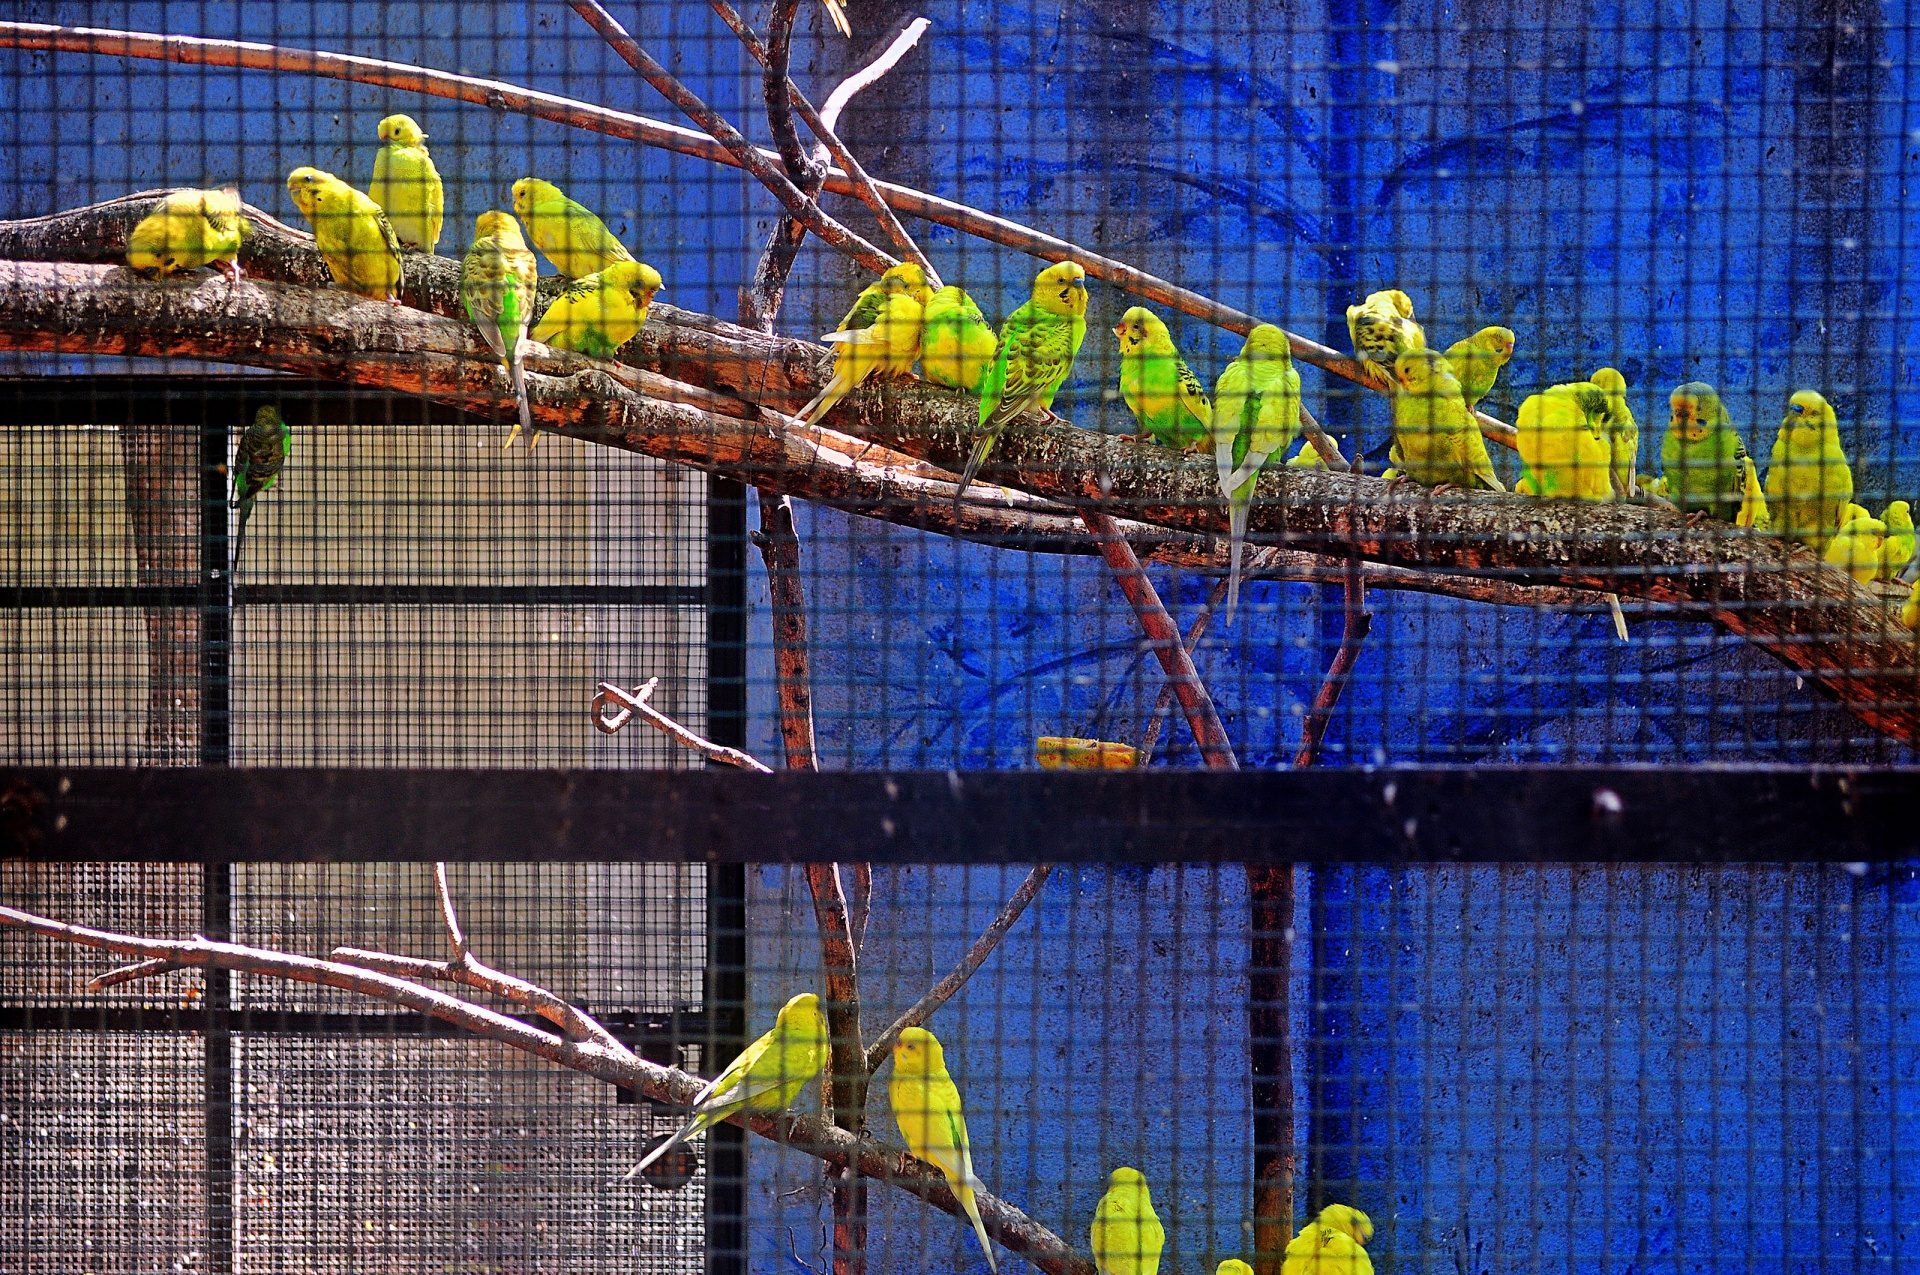 bird parakeet parrot free photo